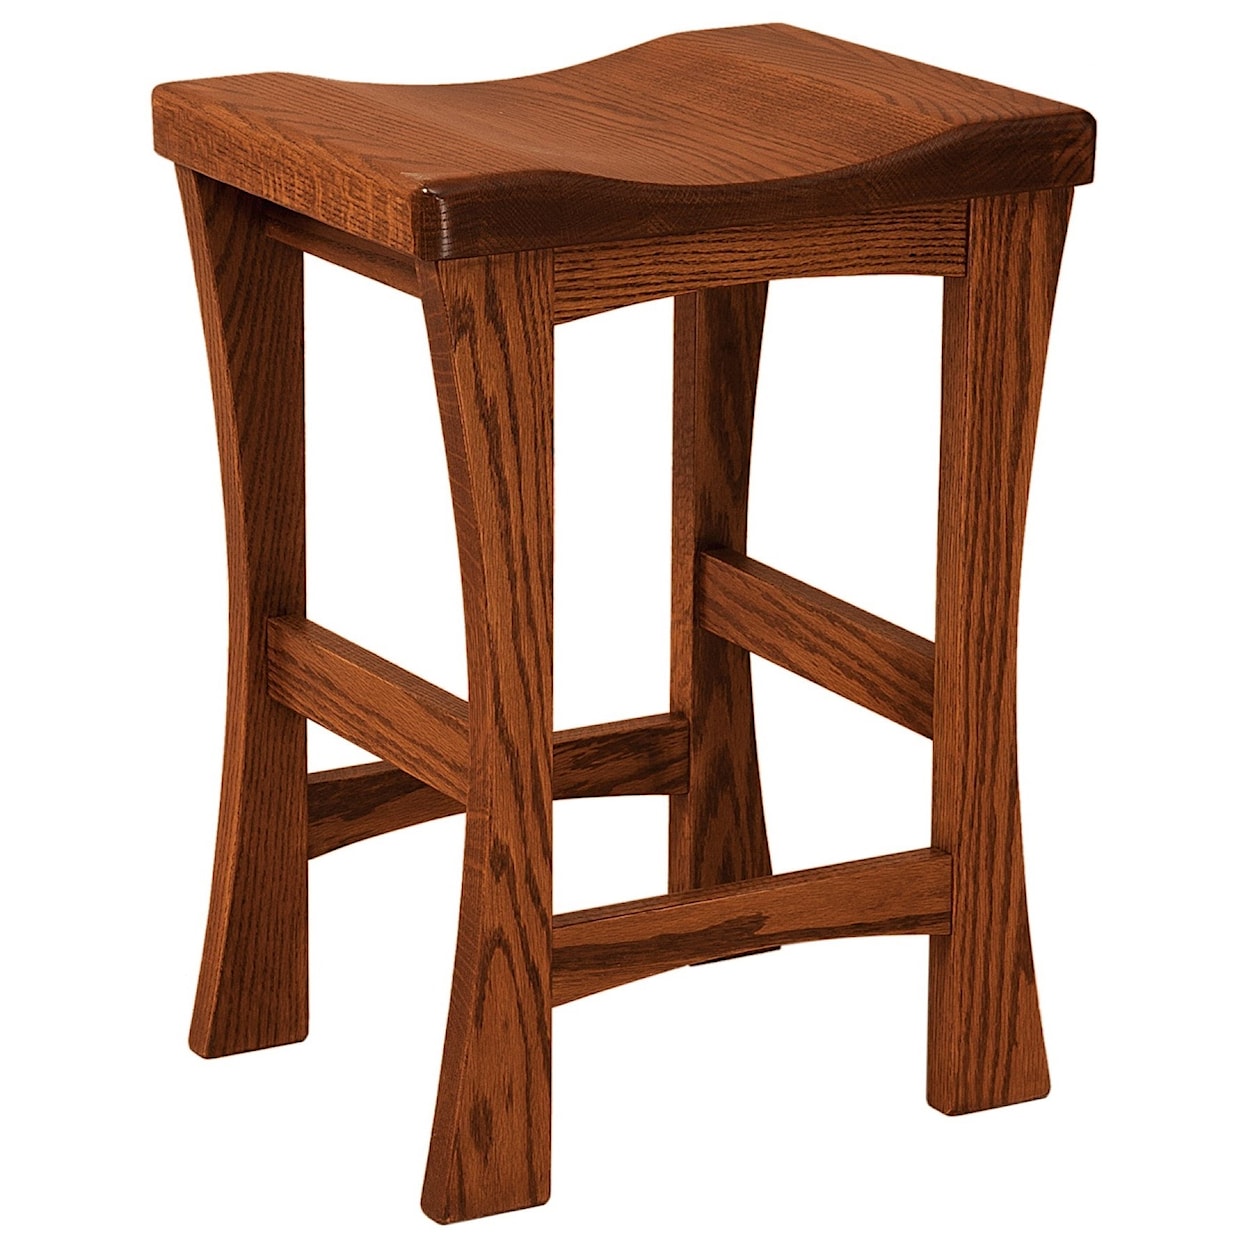 F&N Woodworking Kalston 24" Height Bar Stool - Fabric Seat